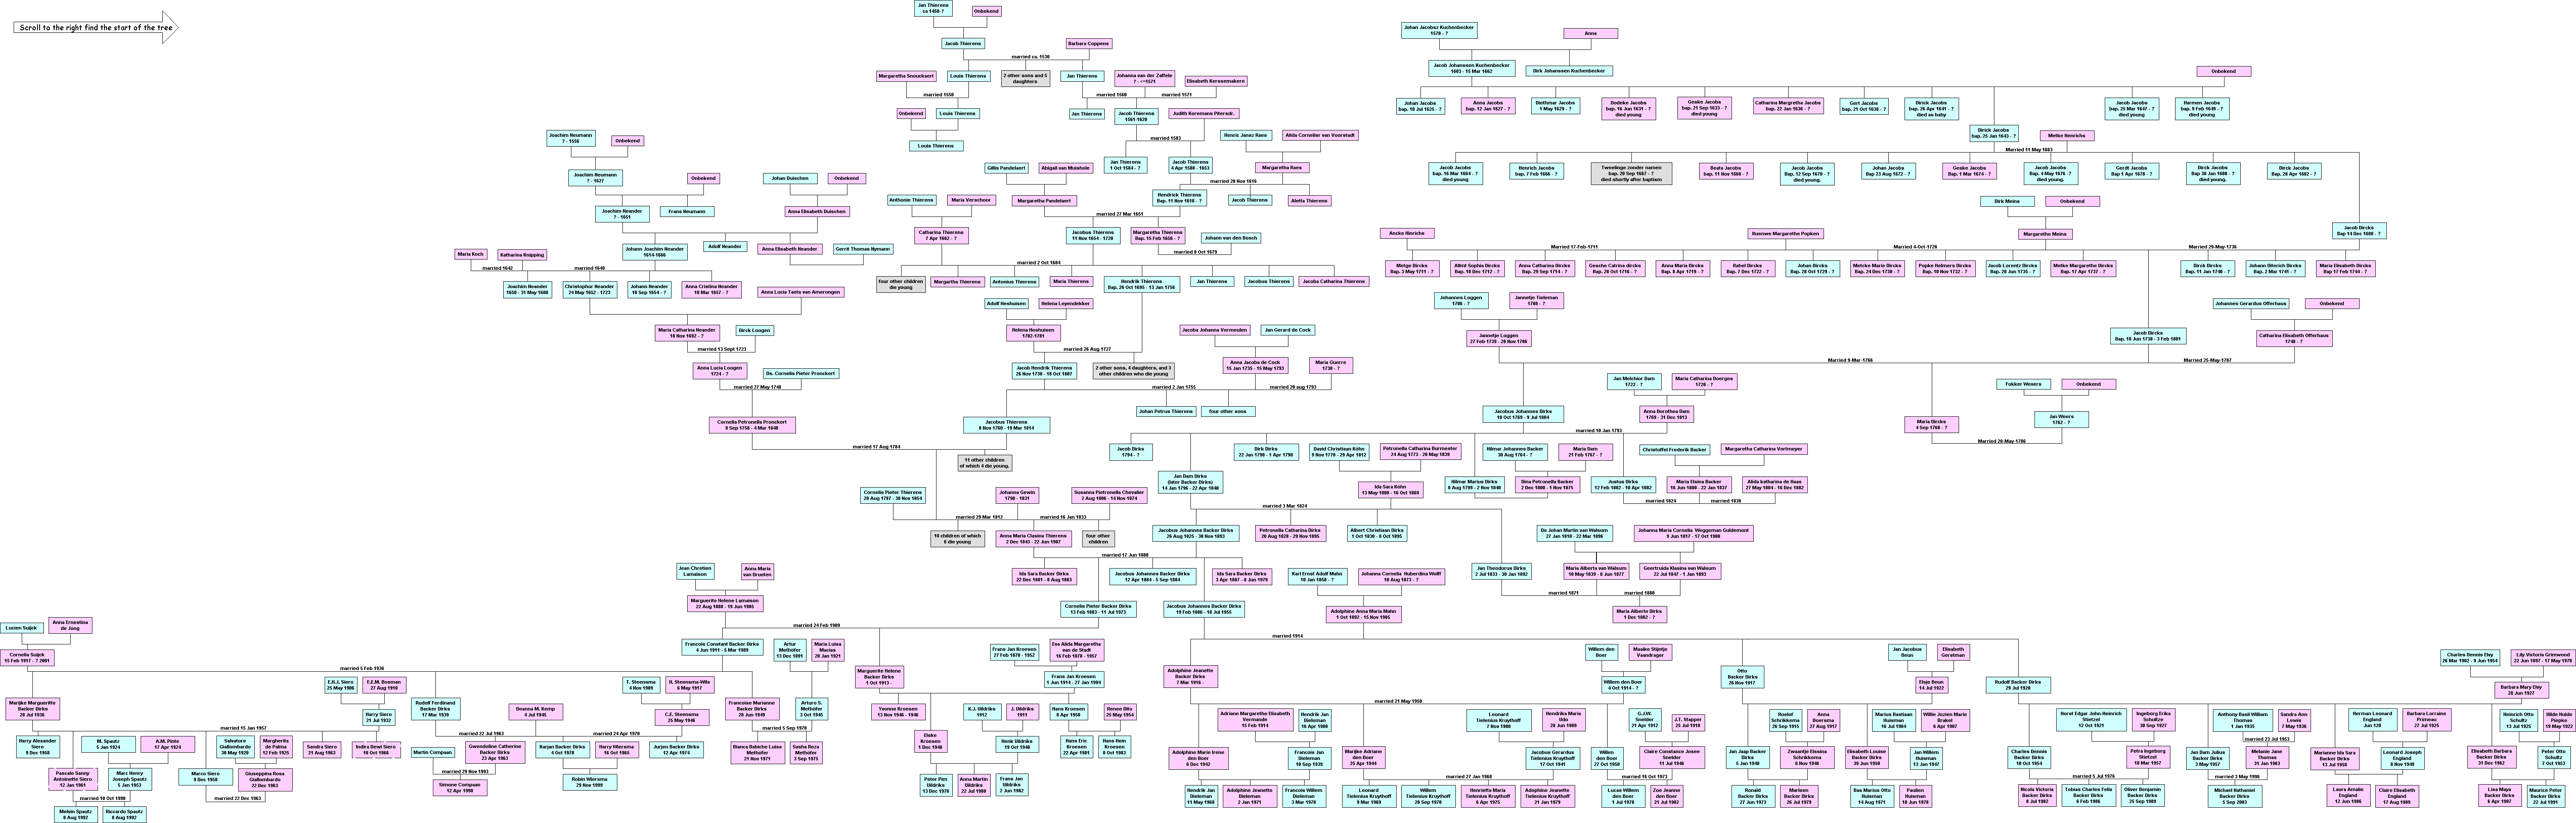 The Backer Dirks genealogical family tree